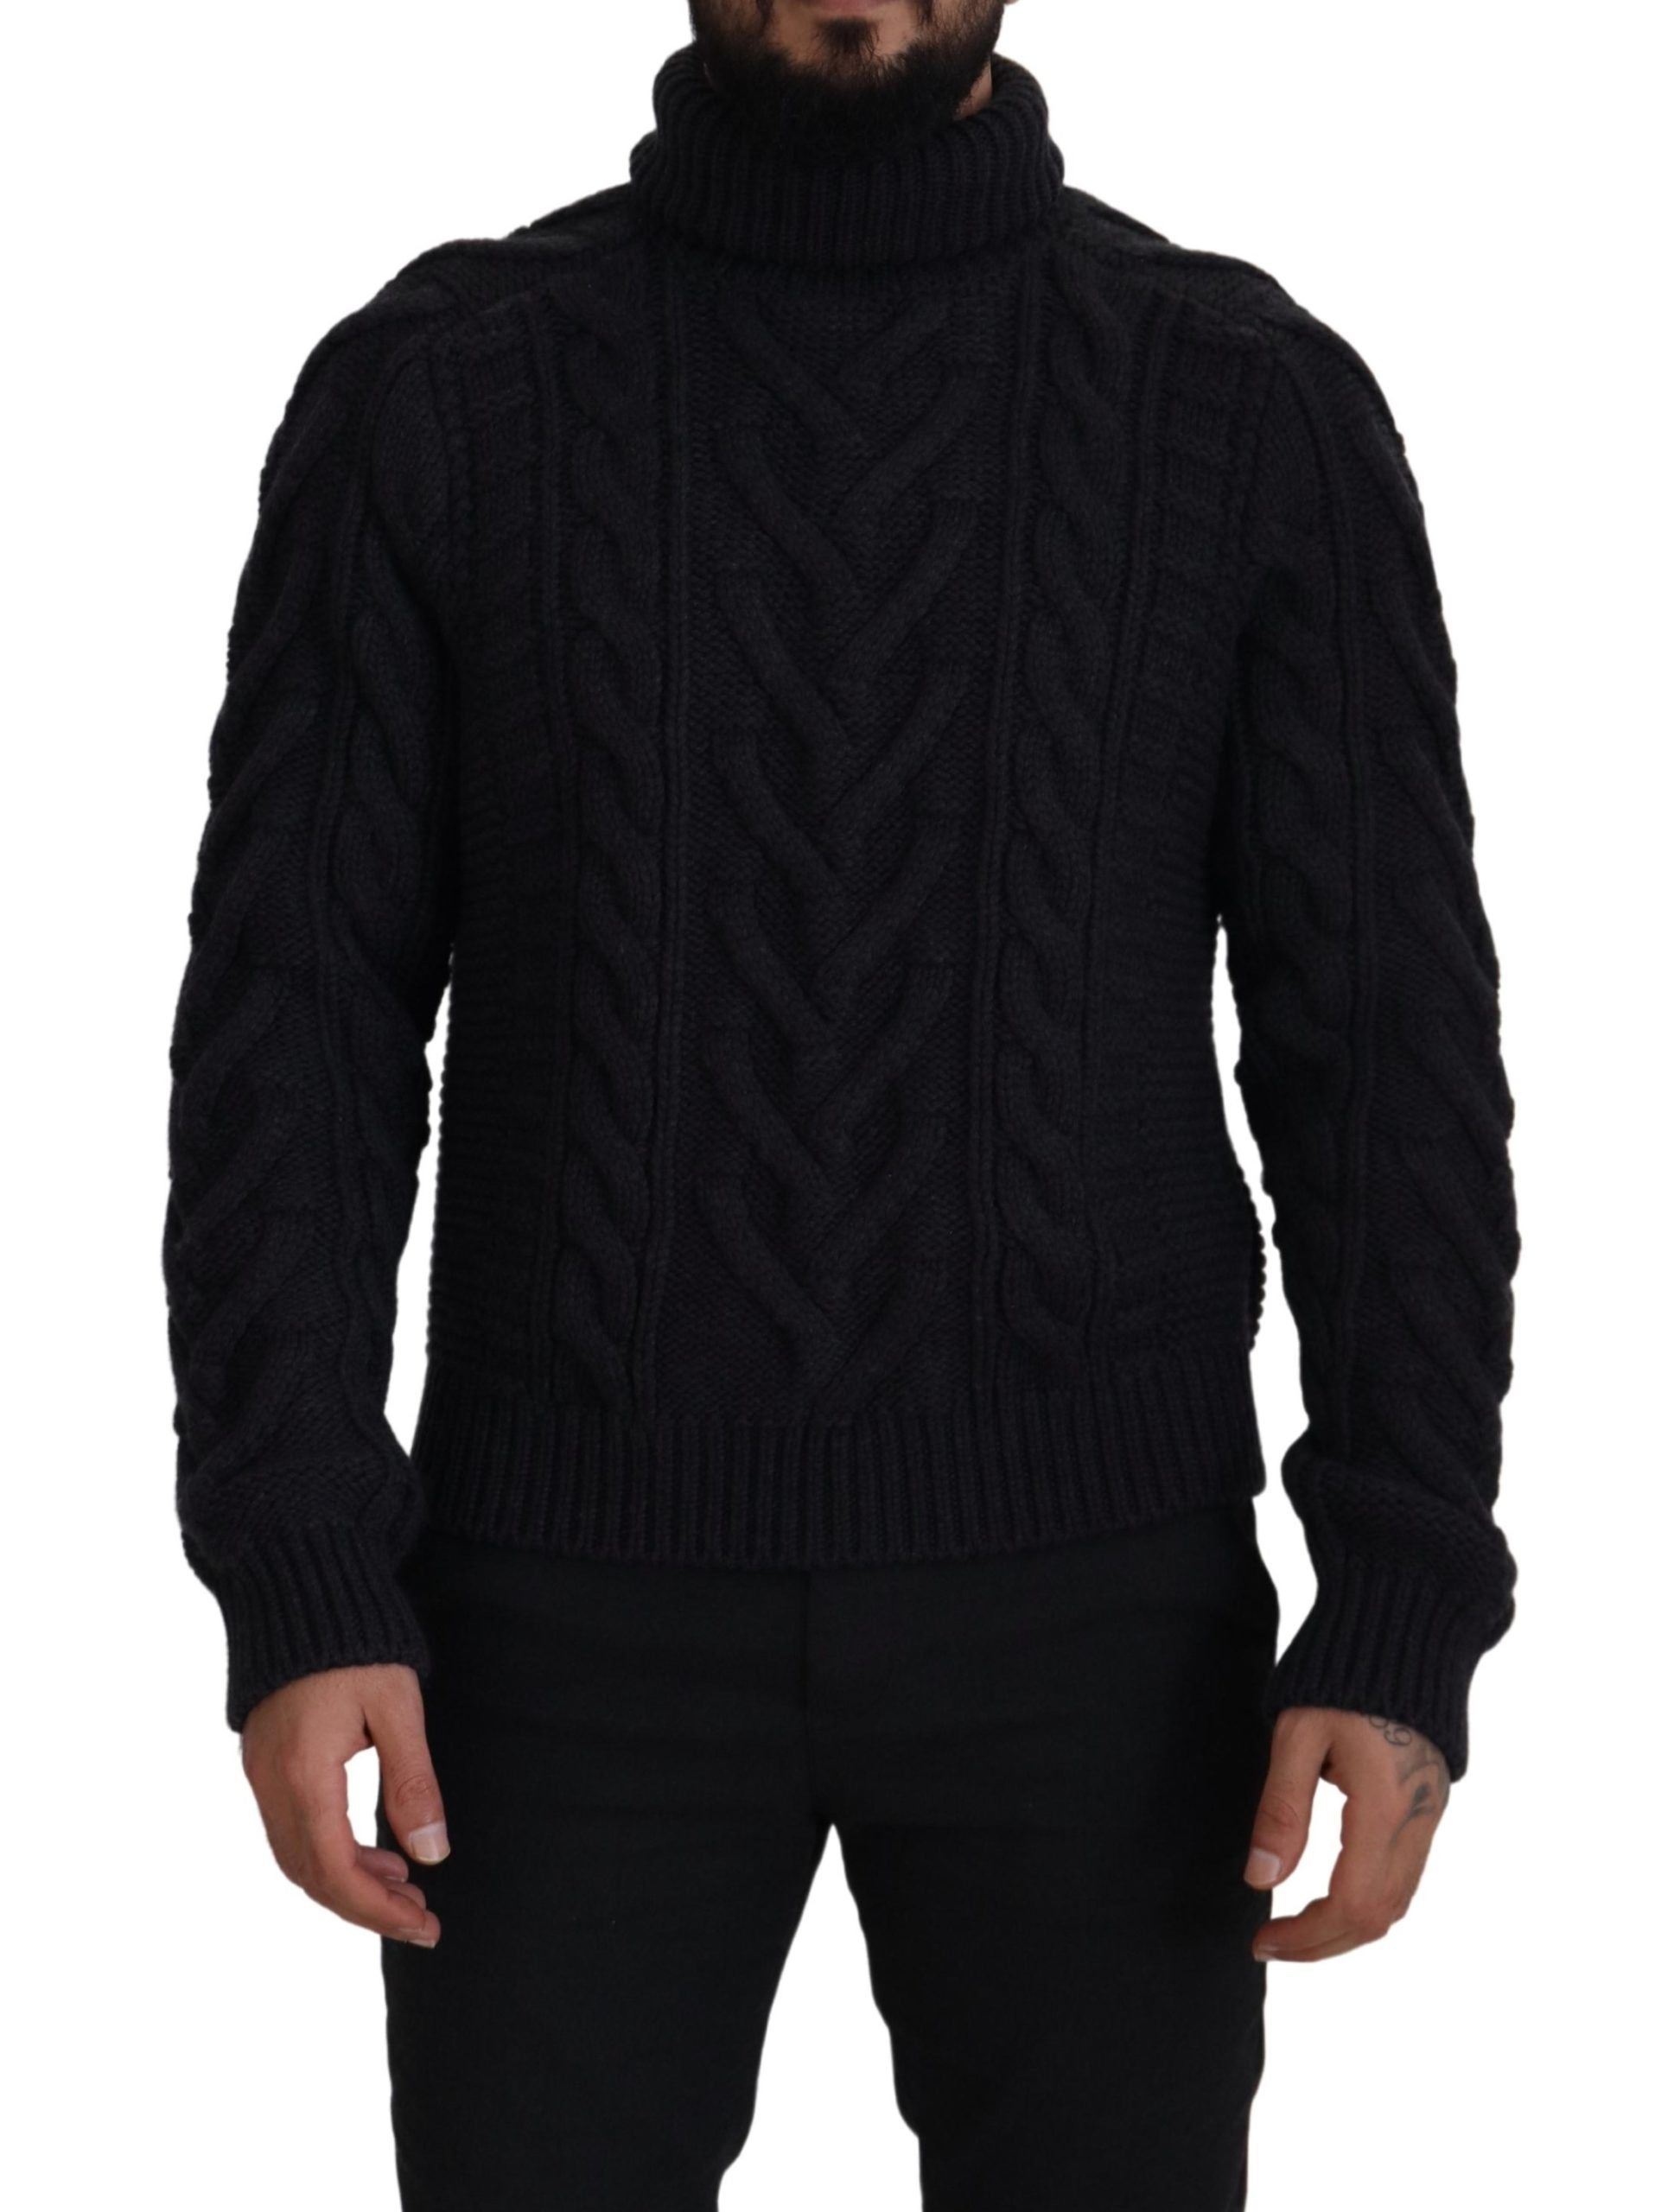 DOLCE & GABBANA Dolce & Gabbana  Wool Knit Turtleneck Pullover Men's Sweater